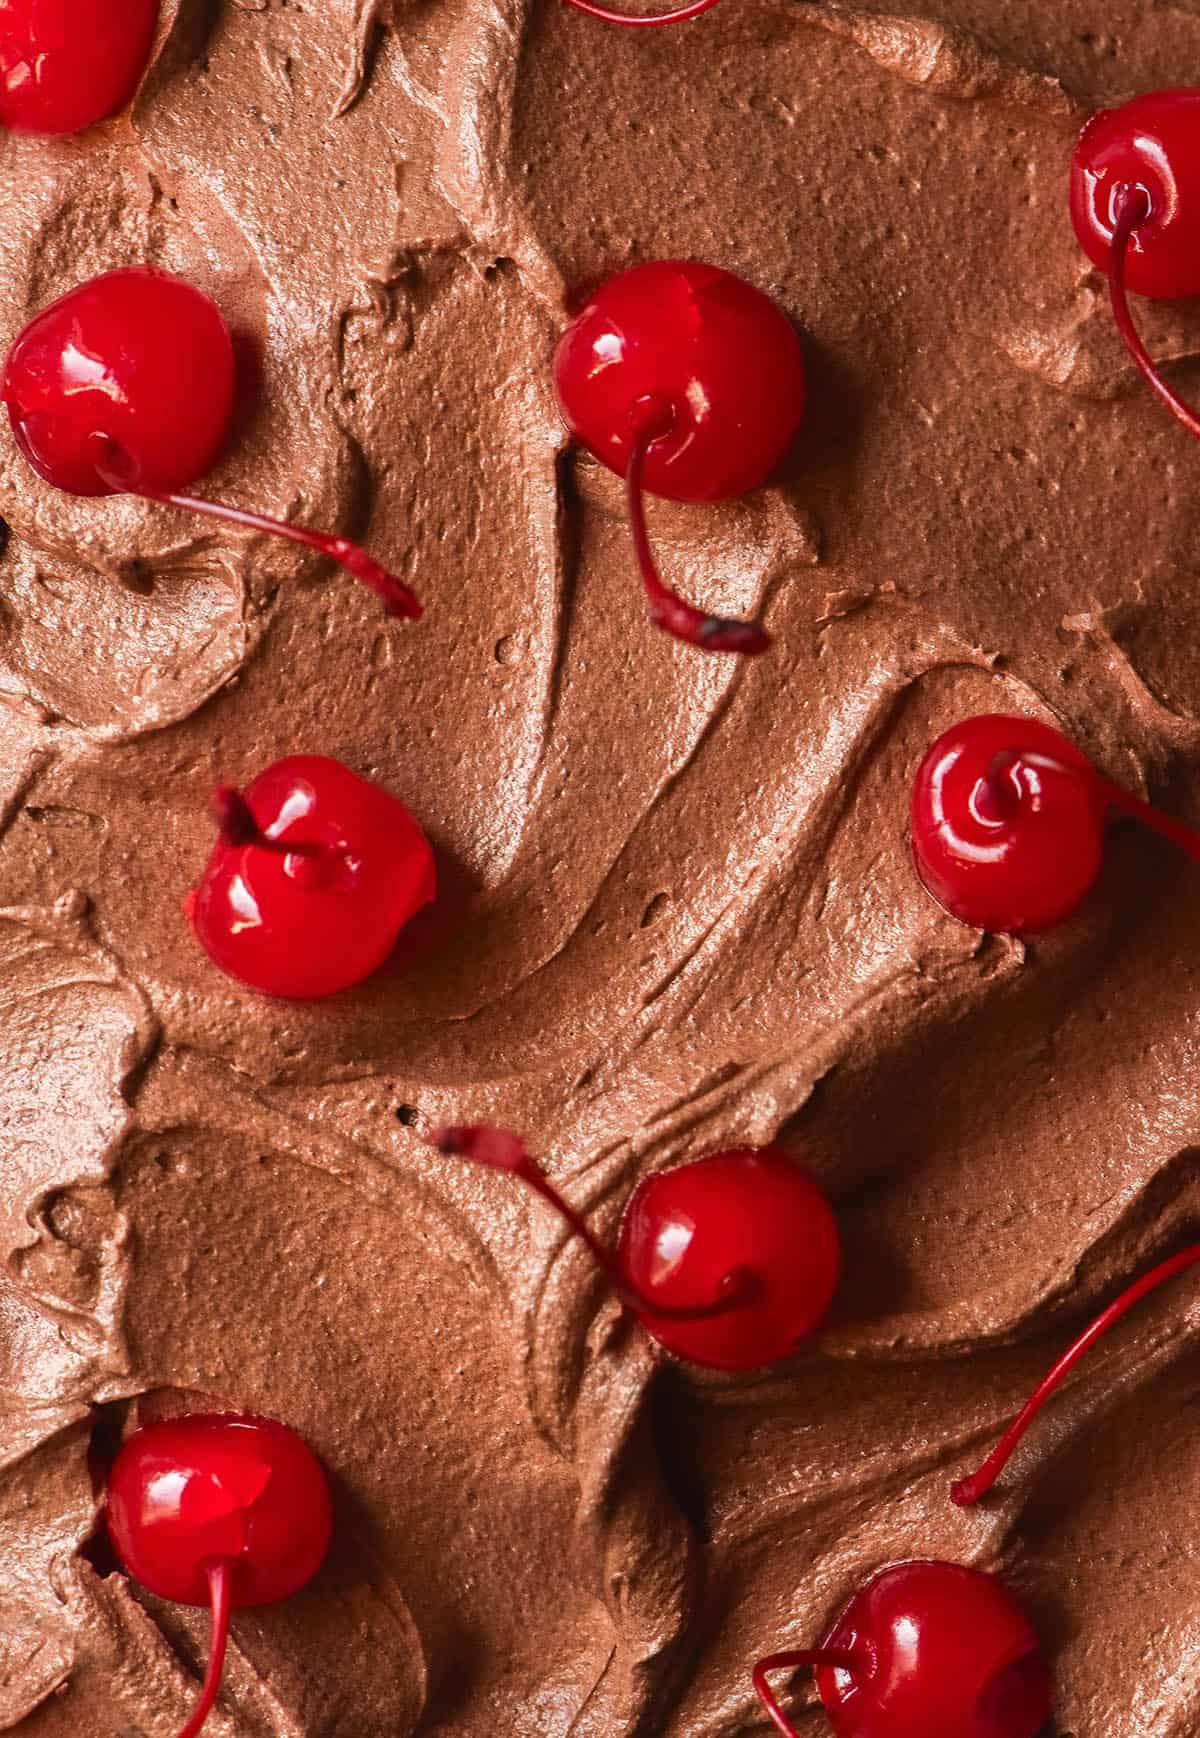 A maco aerial image of swirly dairy free chocolate buttercream topped with maraschino cherries